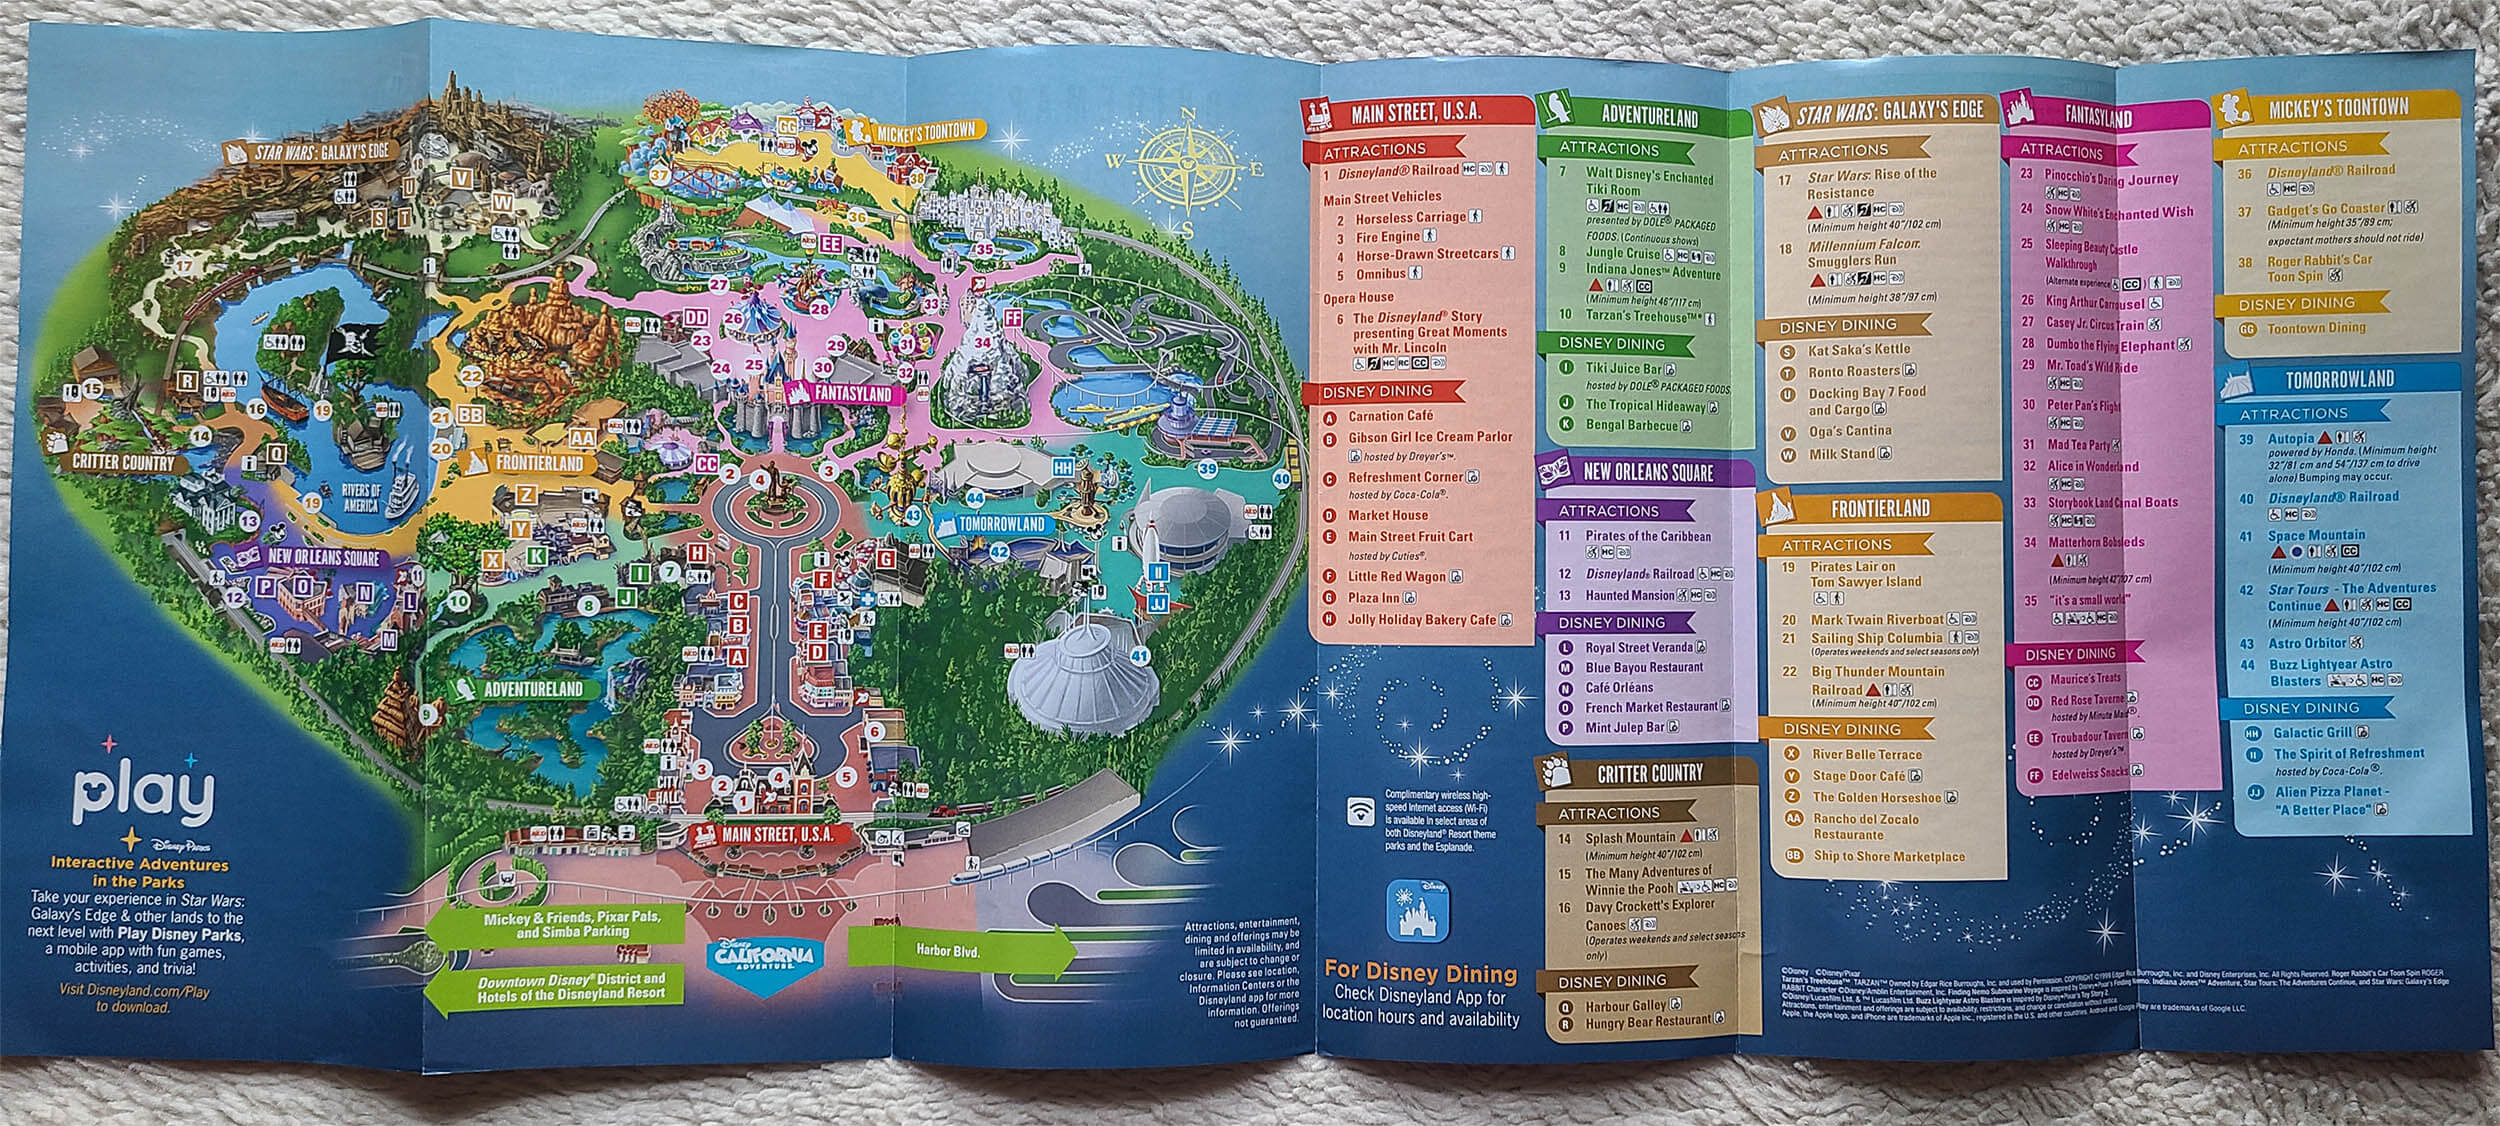 21 Disneyland Park Guide Maps